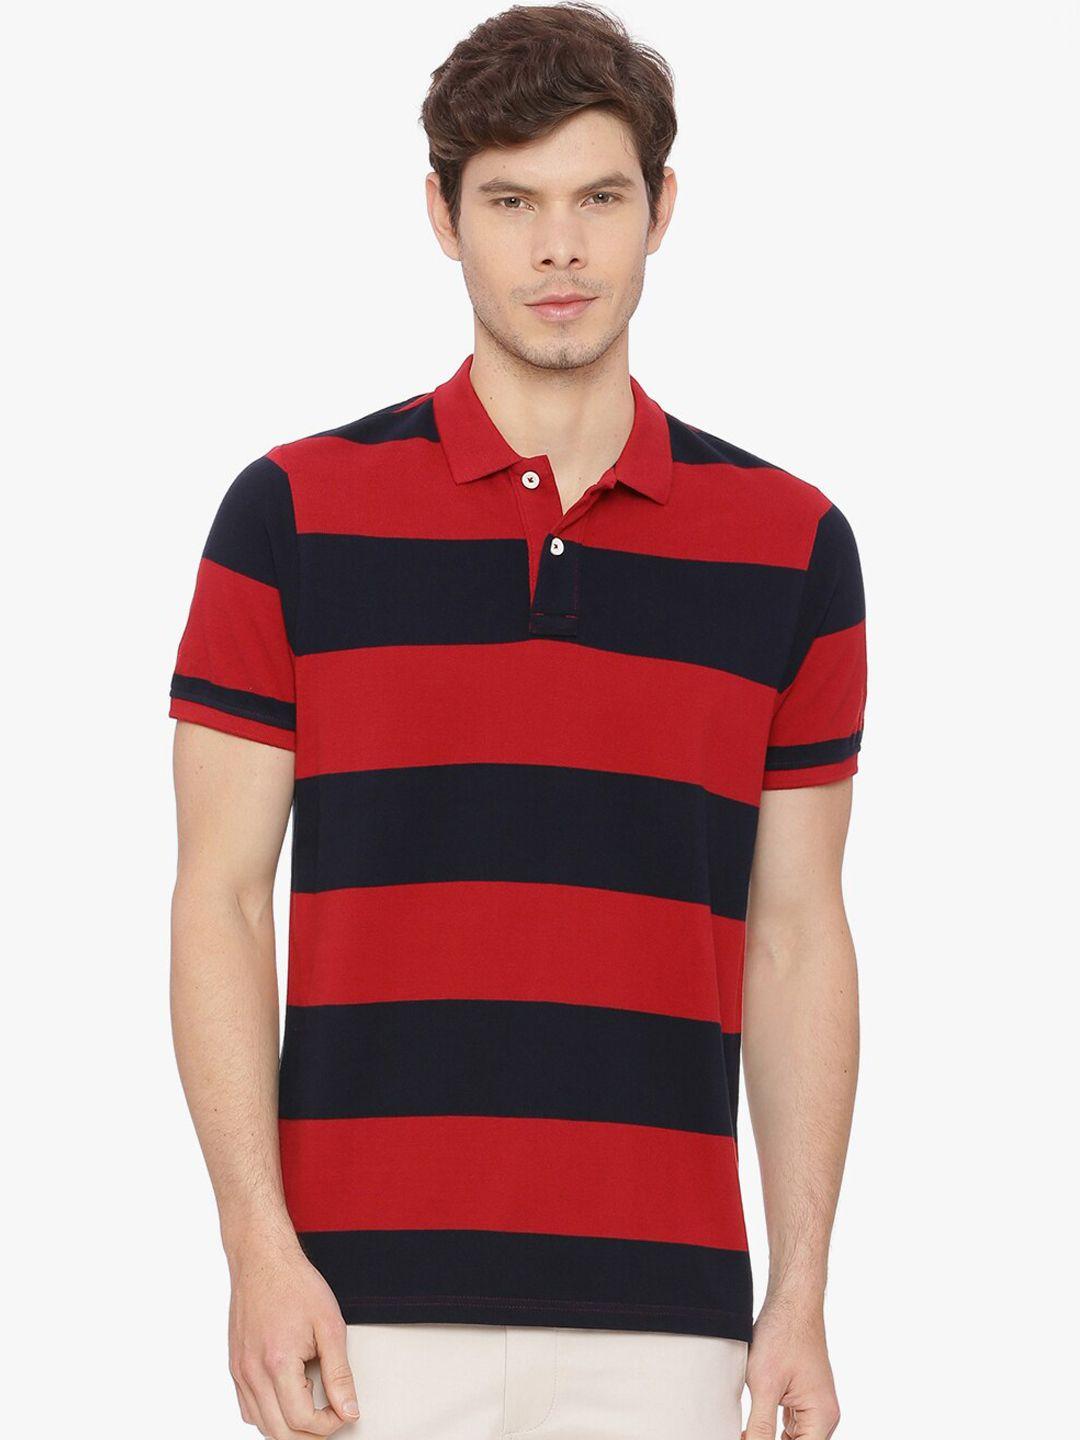 basics men red striped round neck t-shirt